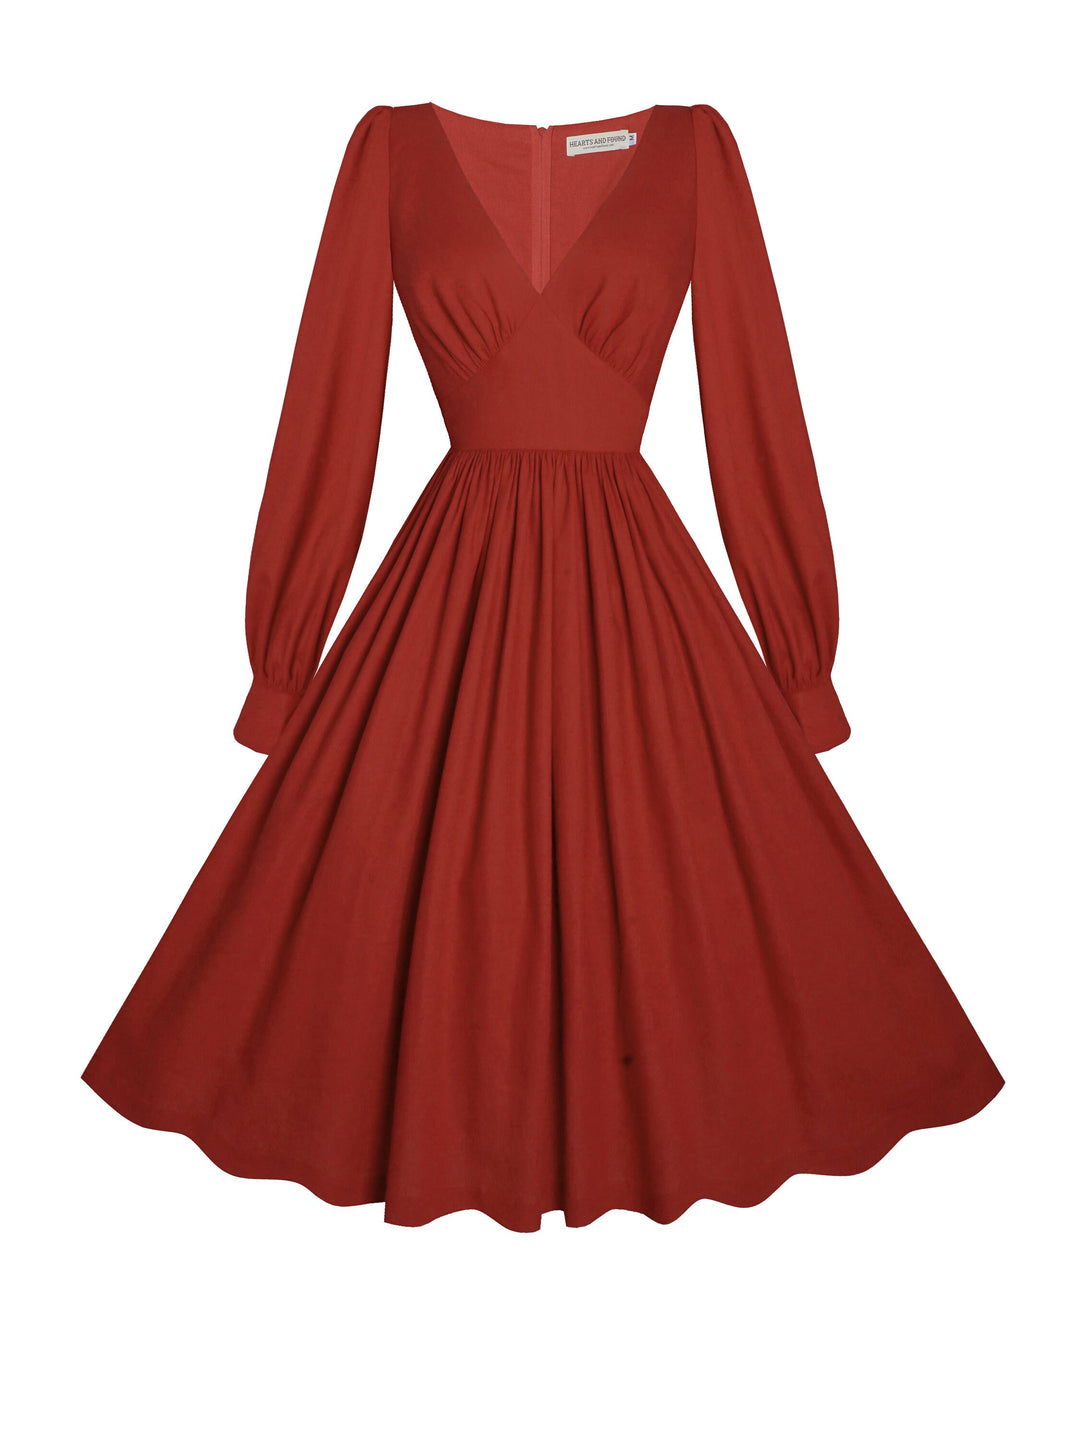 MTO - Harlow Dress in Brick Red Linen